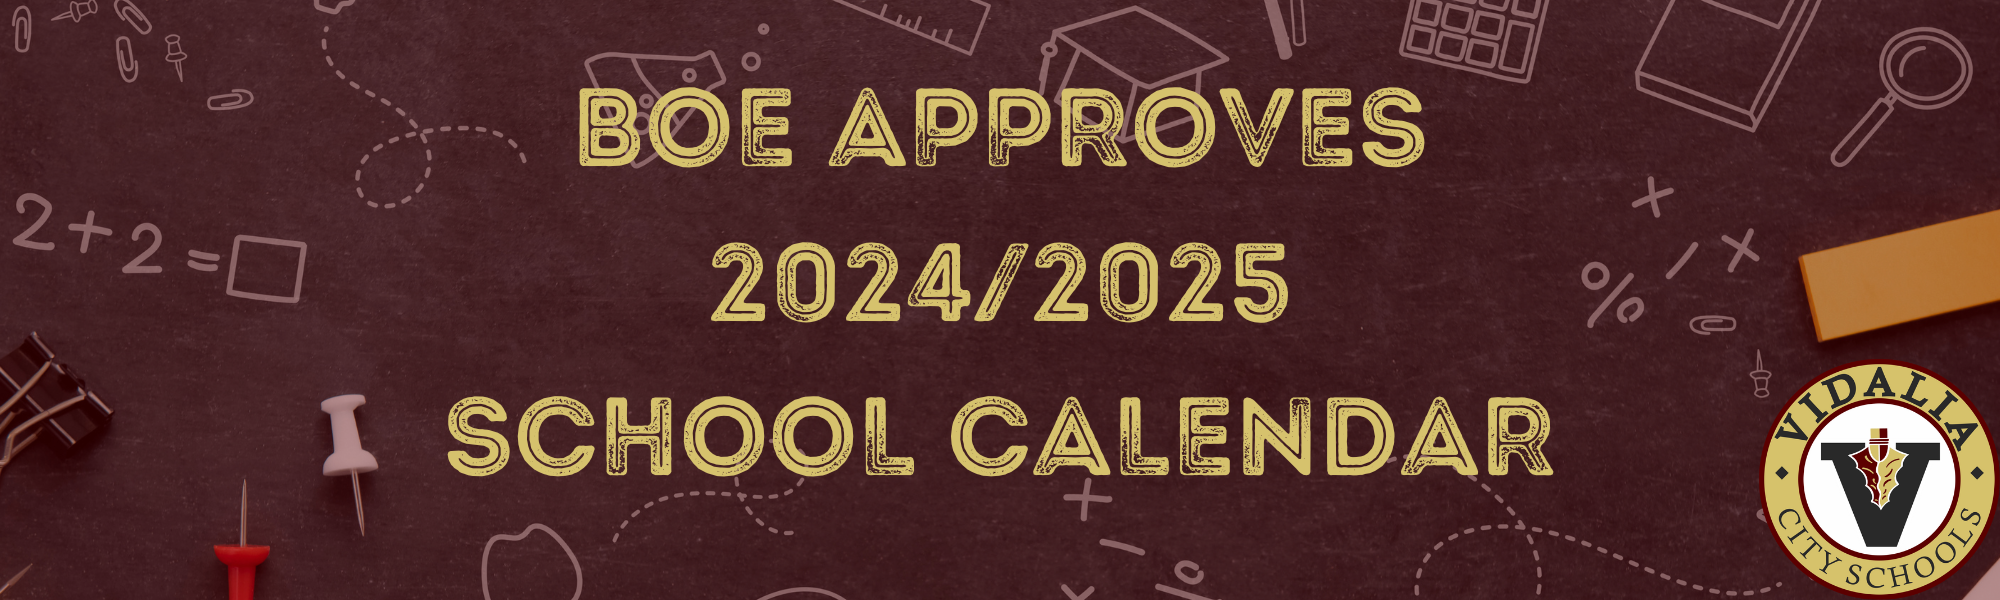 2024/25 School Calendar Approved